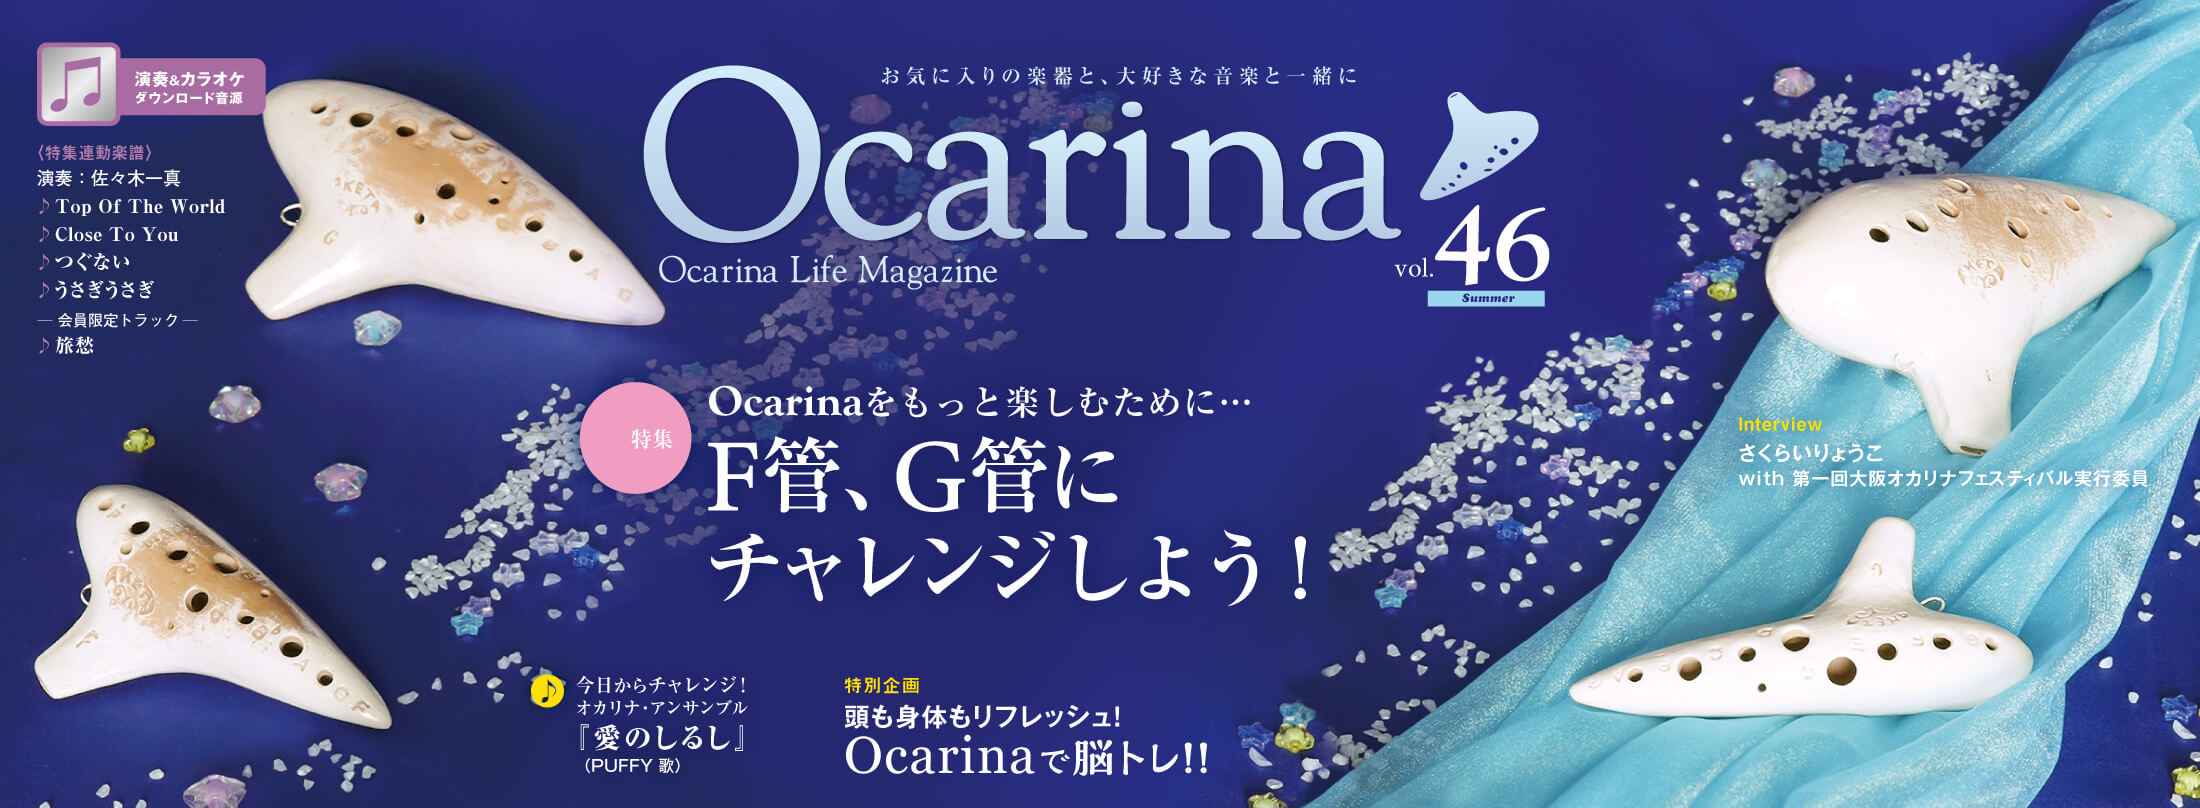 Ocarina 46号